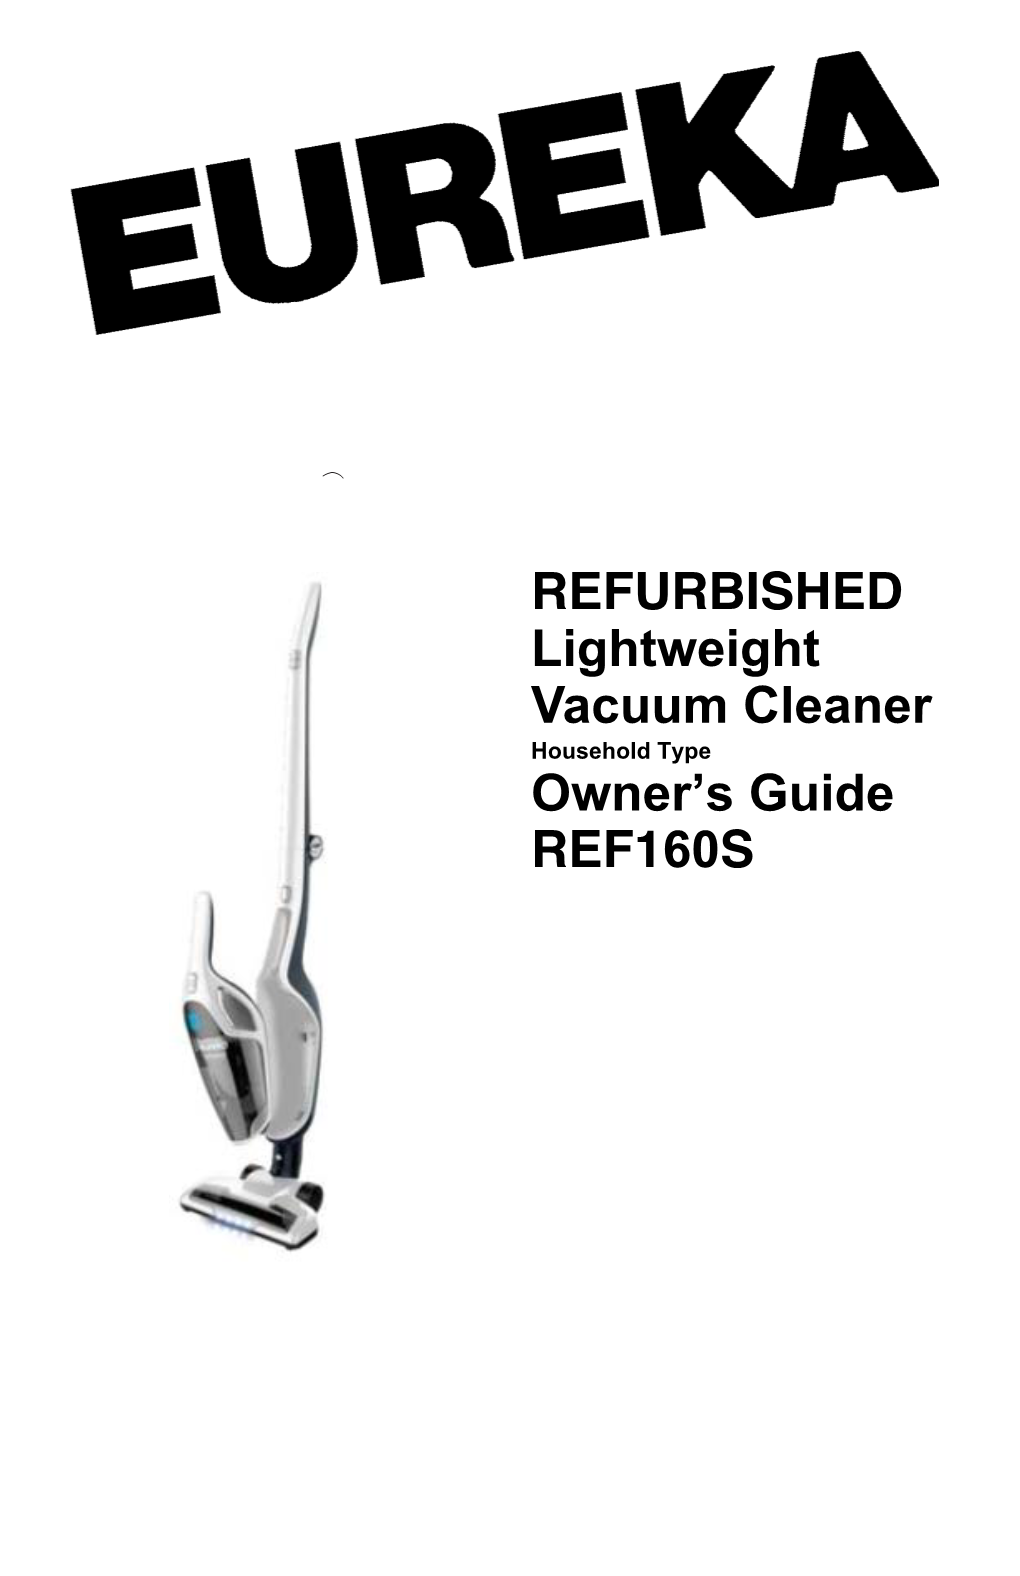 REFURBISHED Lightweight Vacuum Cleaner Owner's Guide REF160S